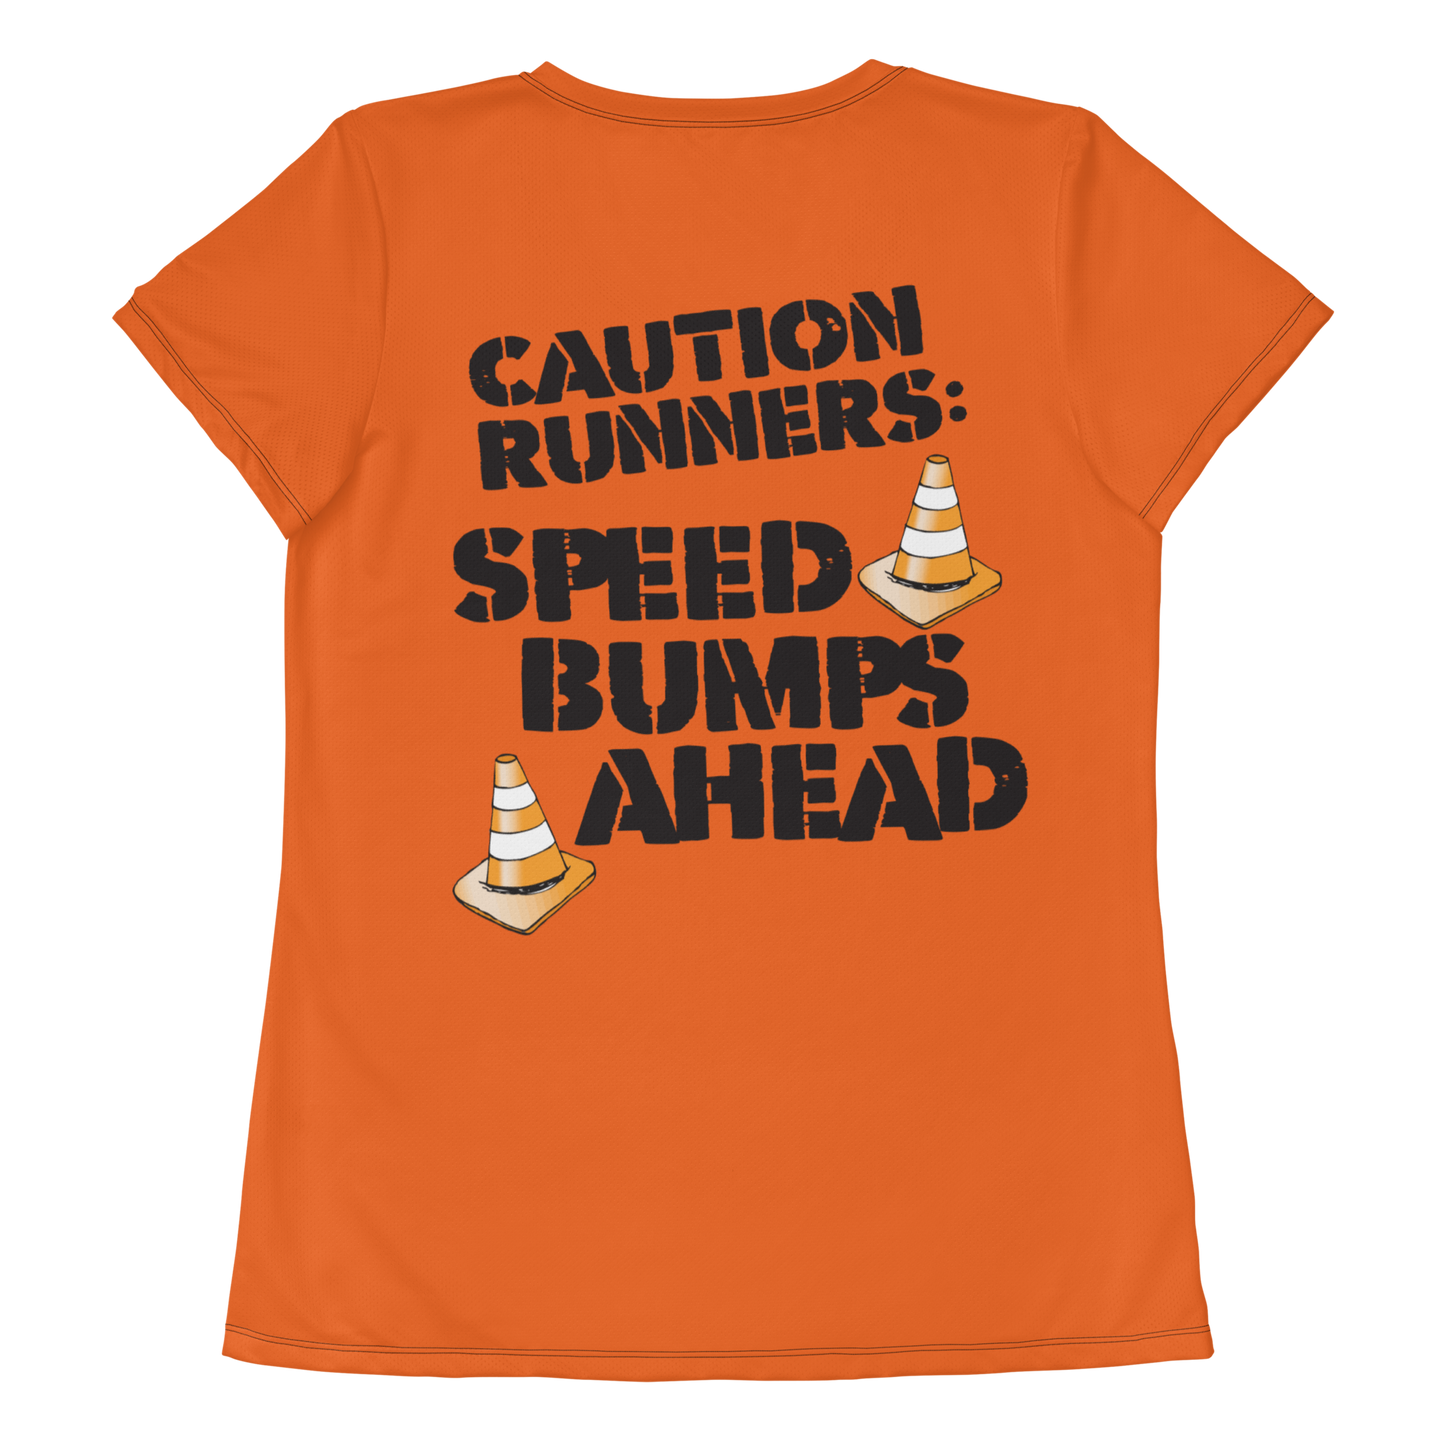 runTheParks - Caution Runners: Speed Bumps Ahead - Custom Women's MaxDri Athletic T-shirt